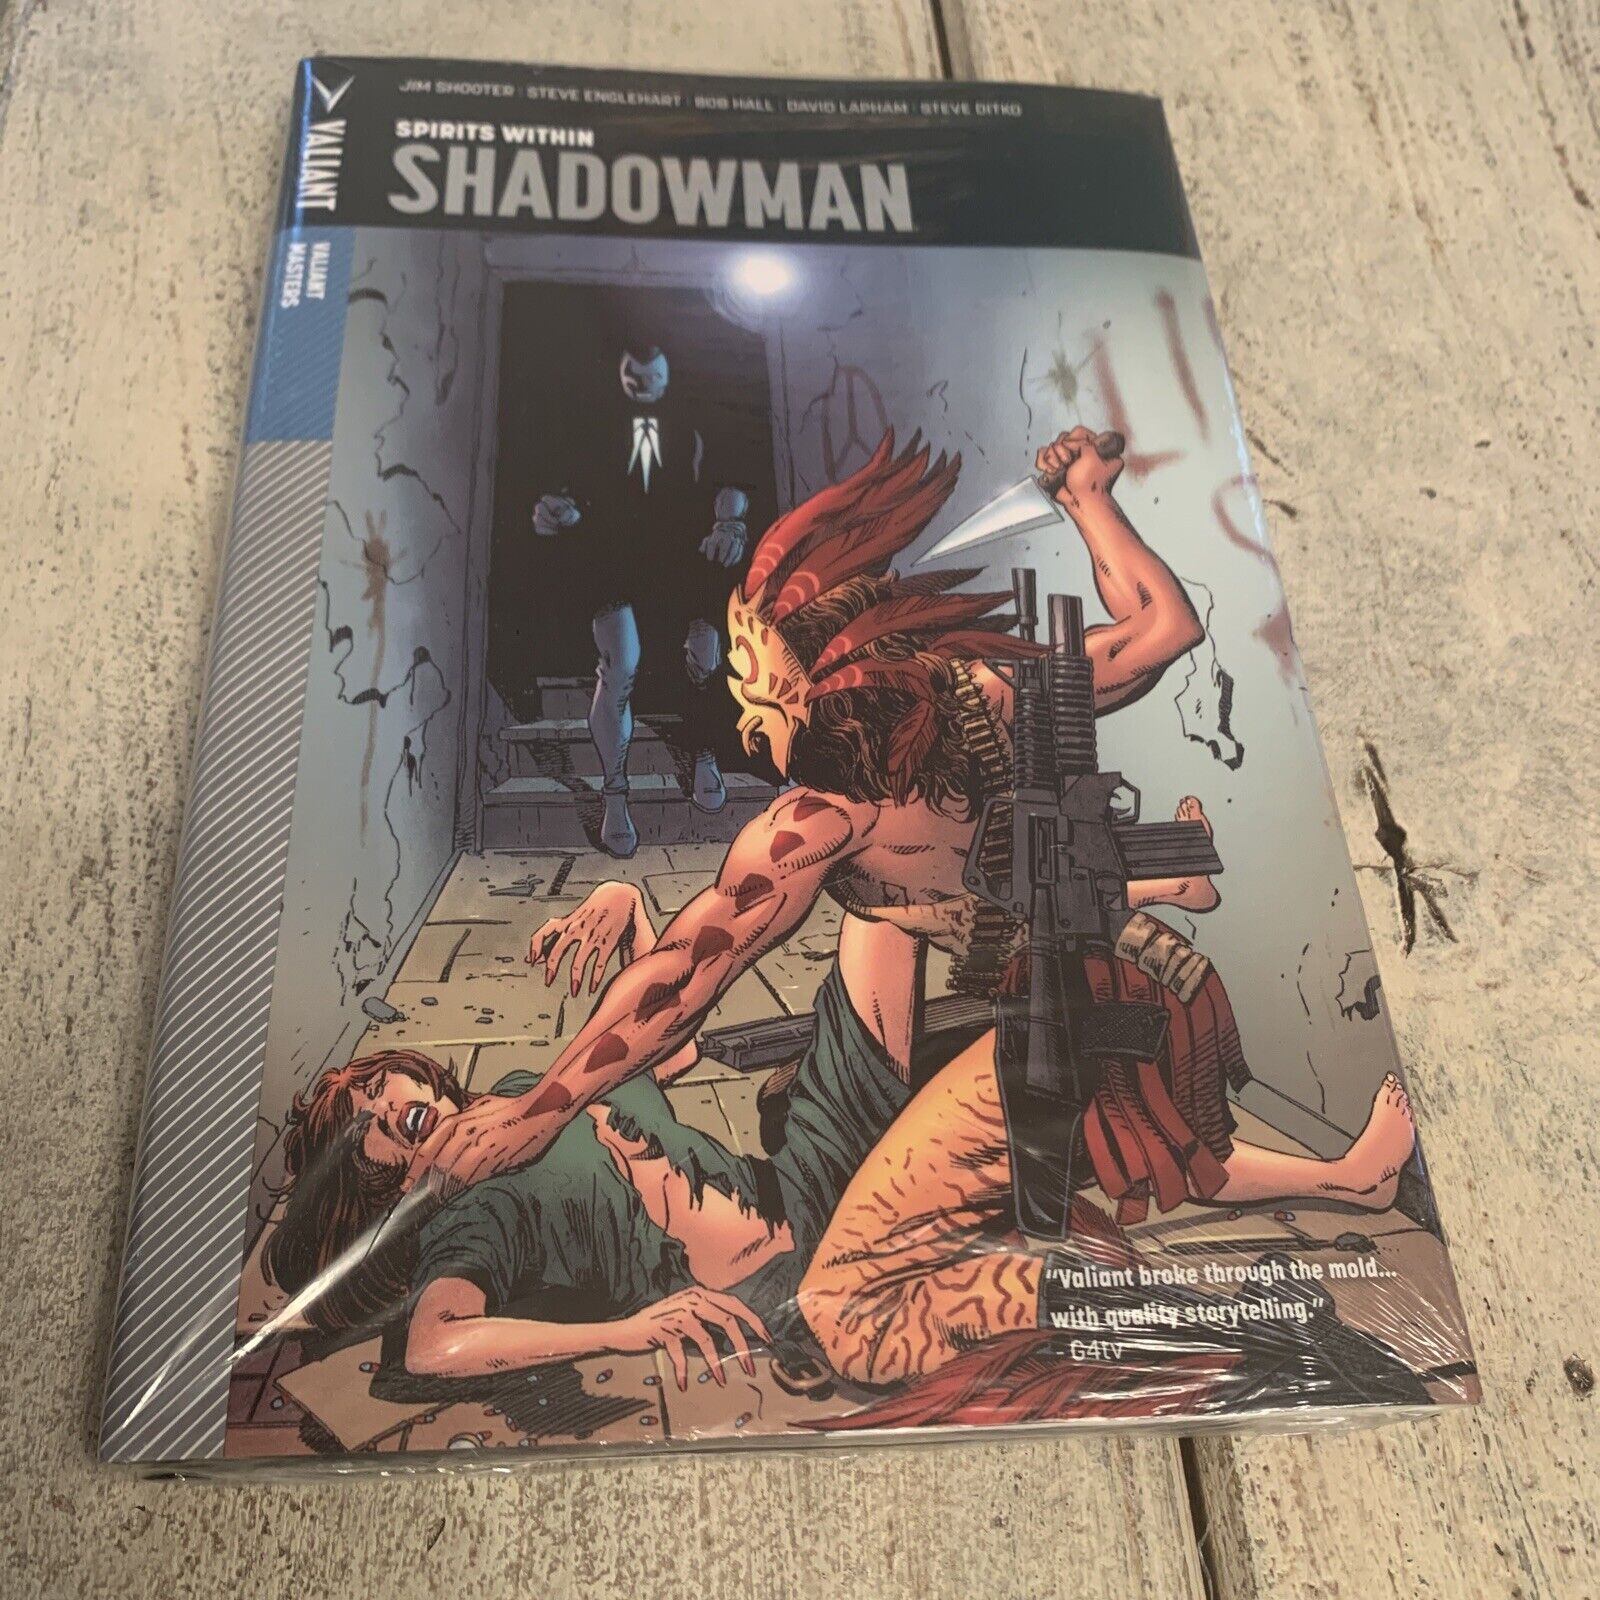 Shadowman : Spirits Within SEALED Hard Back Valiant Volume 1 Shooter **